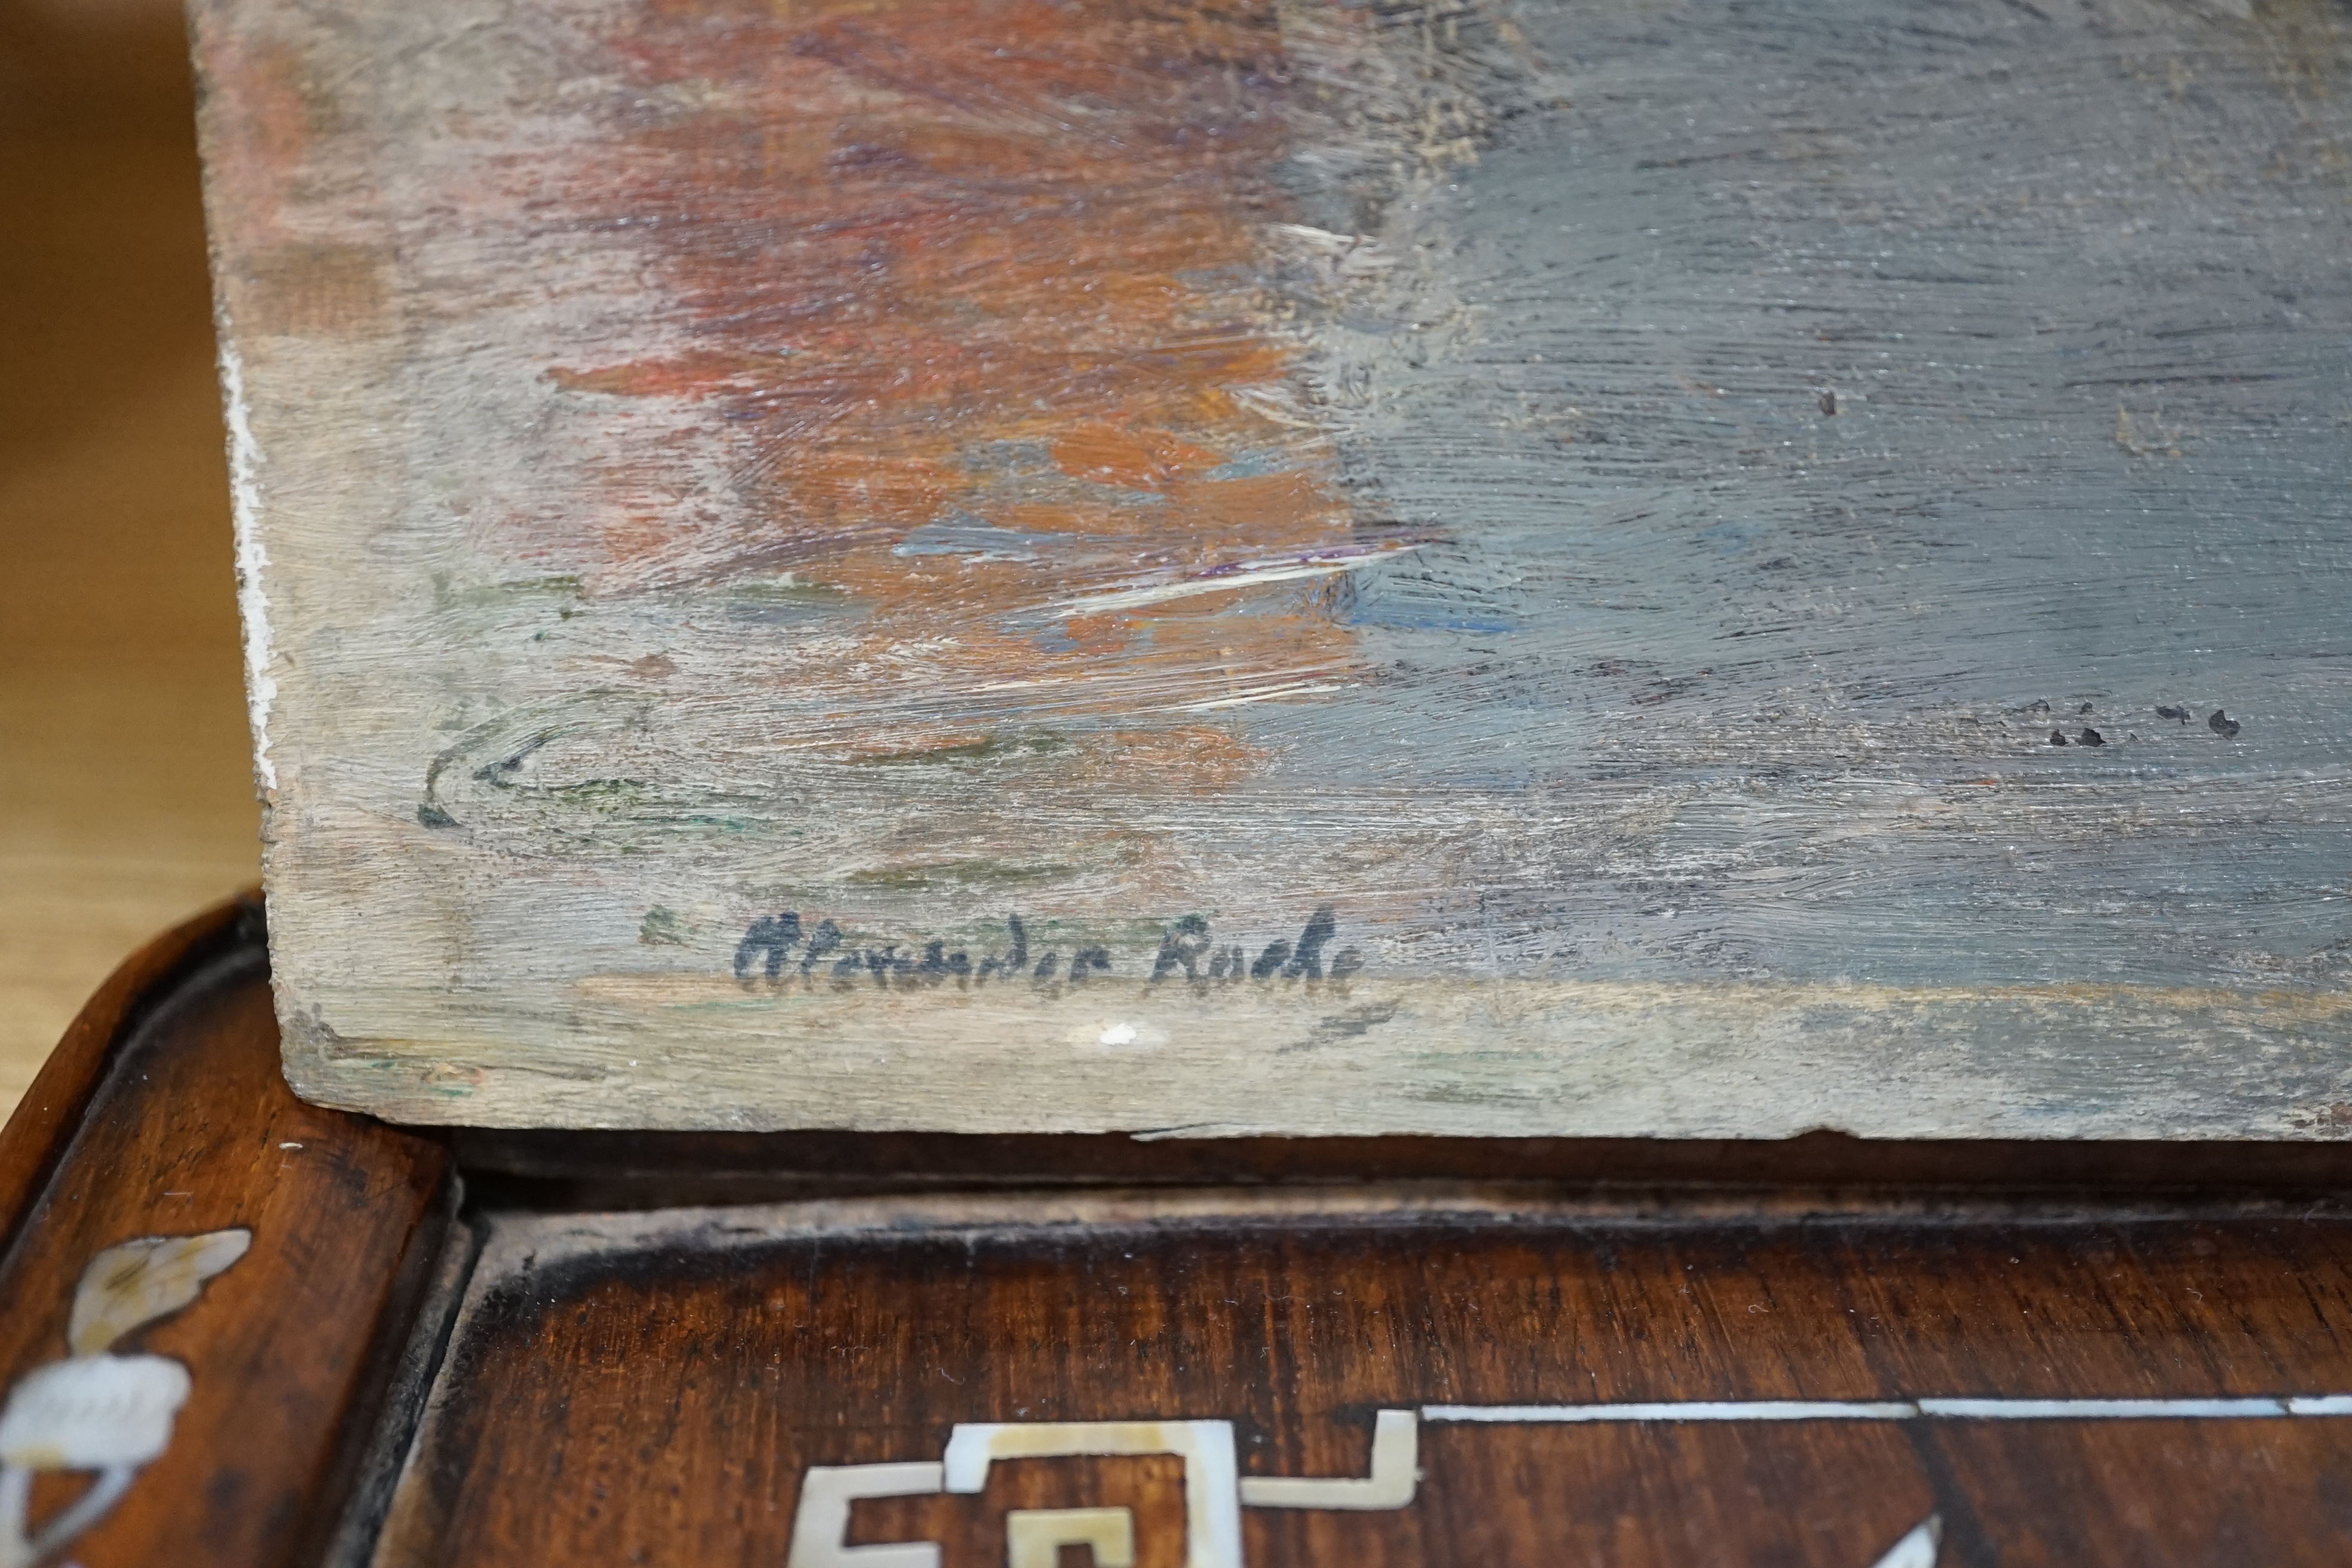 Alexander Ignatius Roche RSA (Scottish, 1861-1921), oil on board, ‘Worcester Bridge’, signed, with Aitken Dott & Son, Edinburgh label, unframed, 26 x 35cm